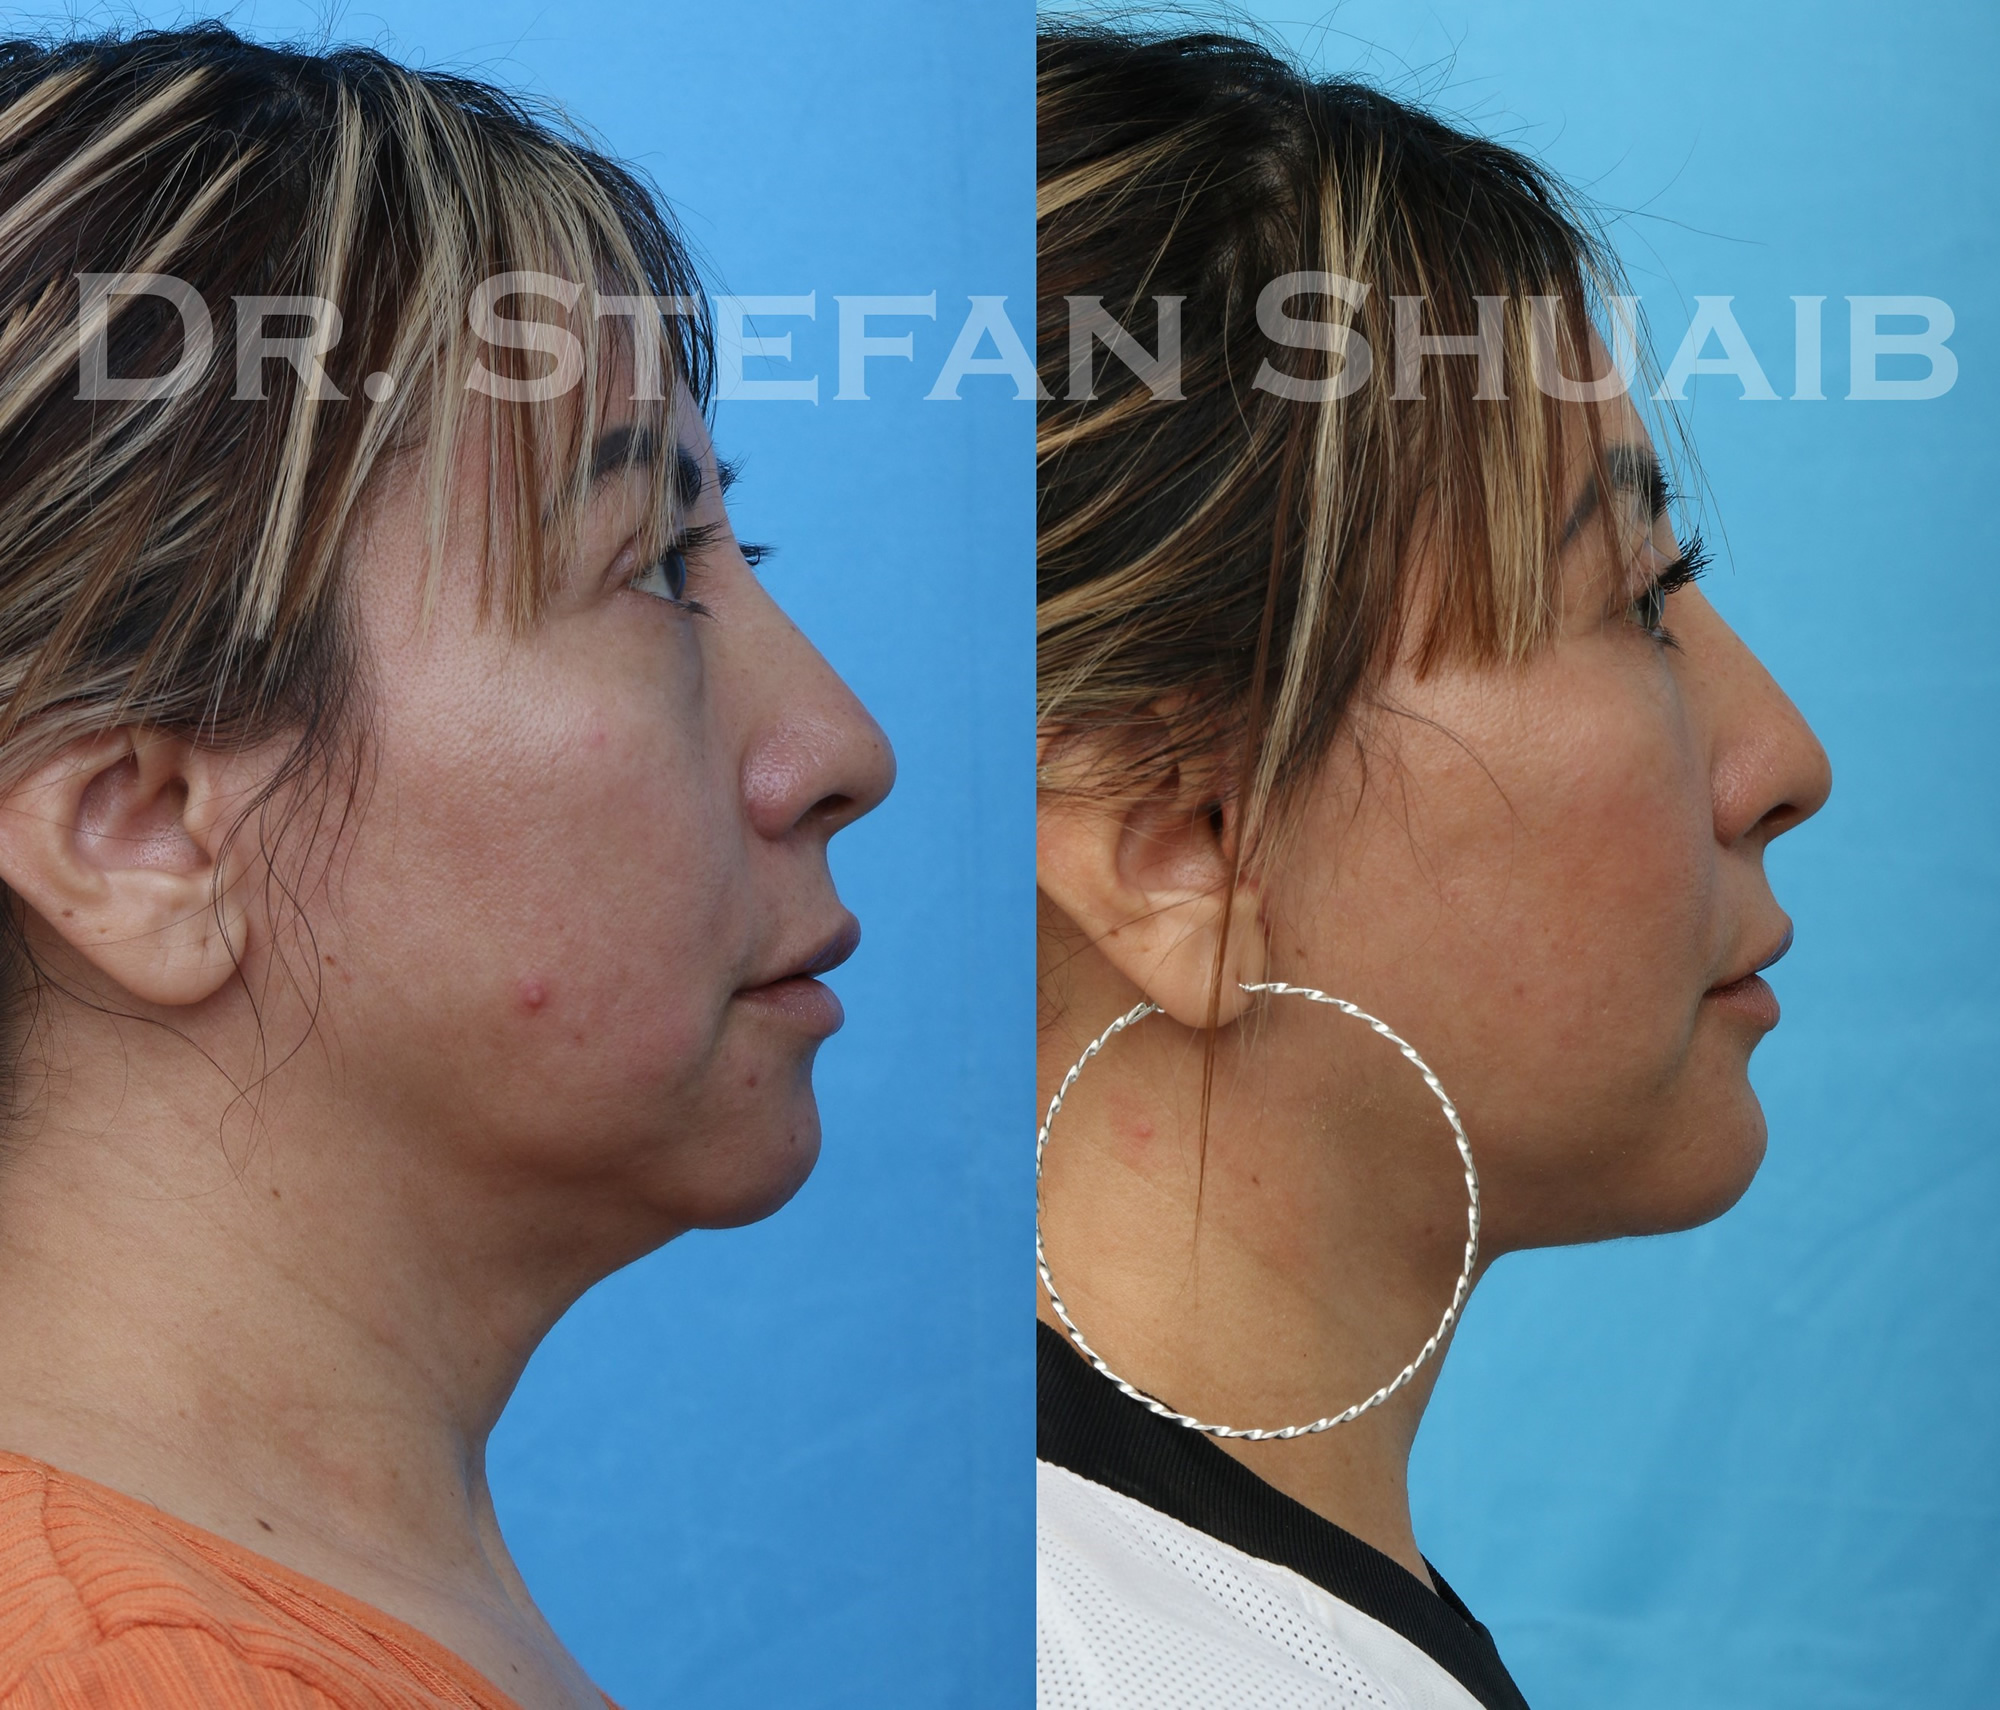 female patient before and after facial rejuvenation procedure